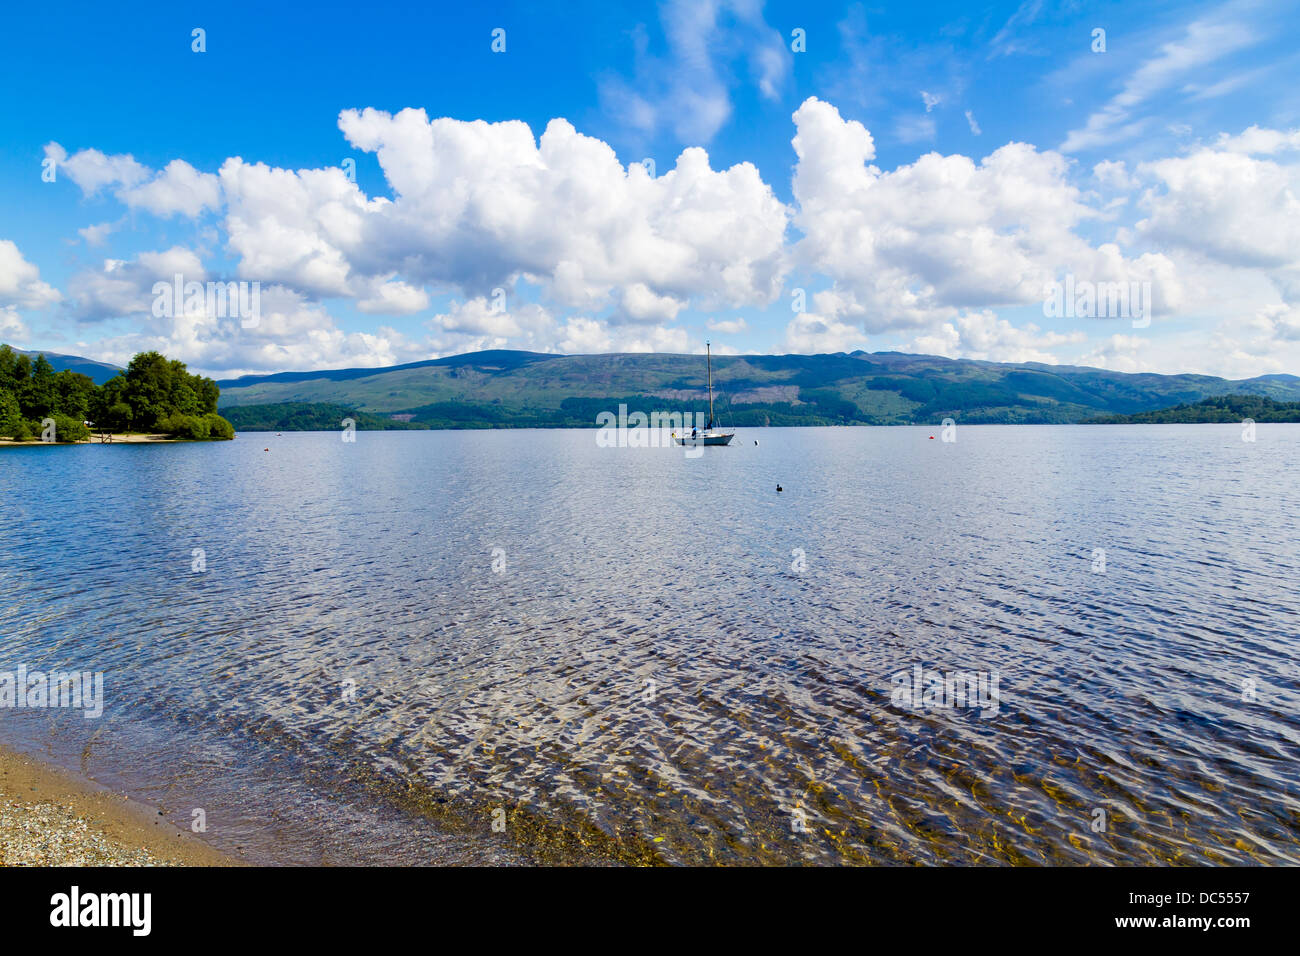 Summer on the banks of Loch Lomond, The Trossachs National Park Scotland UK Stock Photo